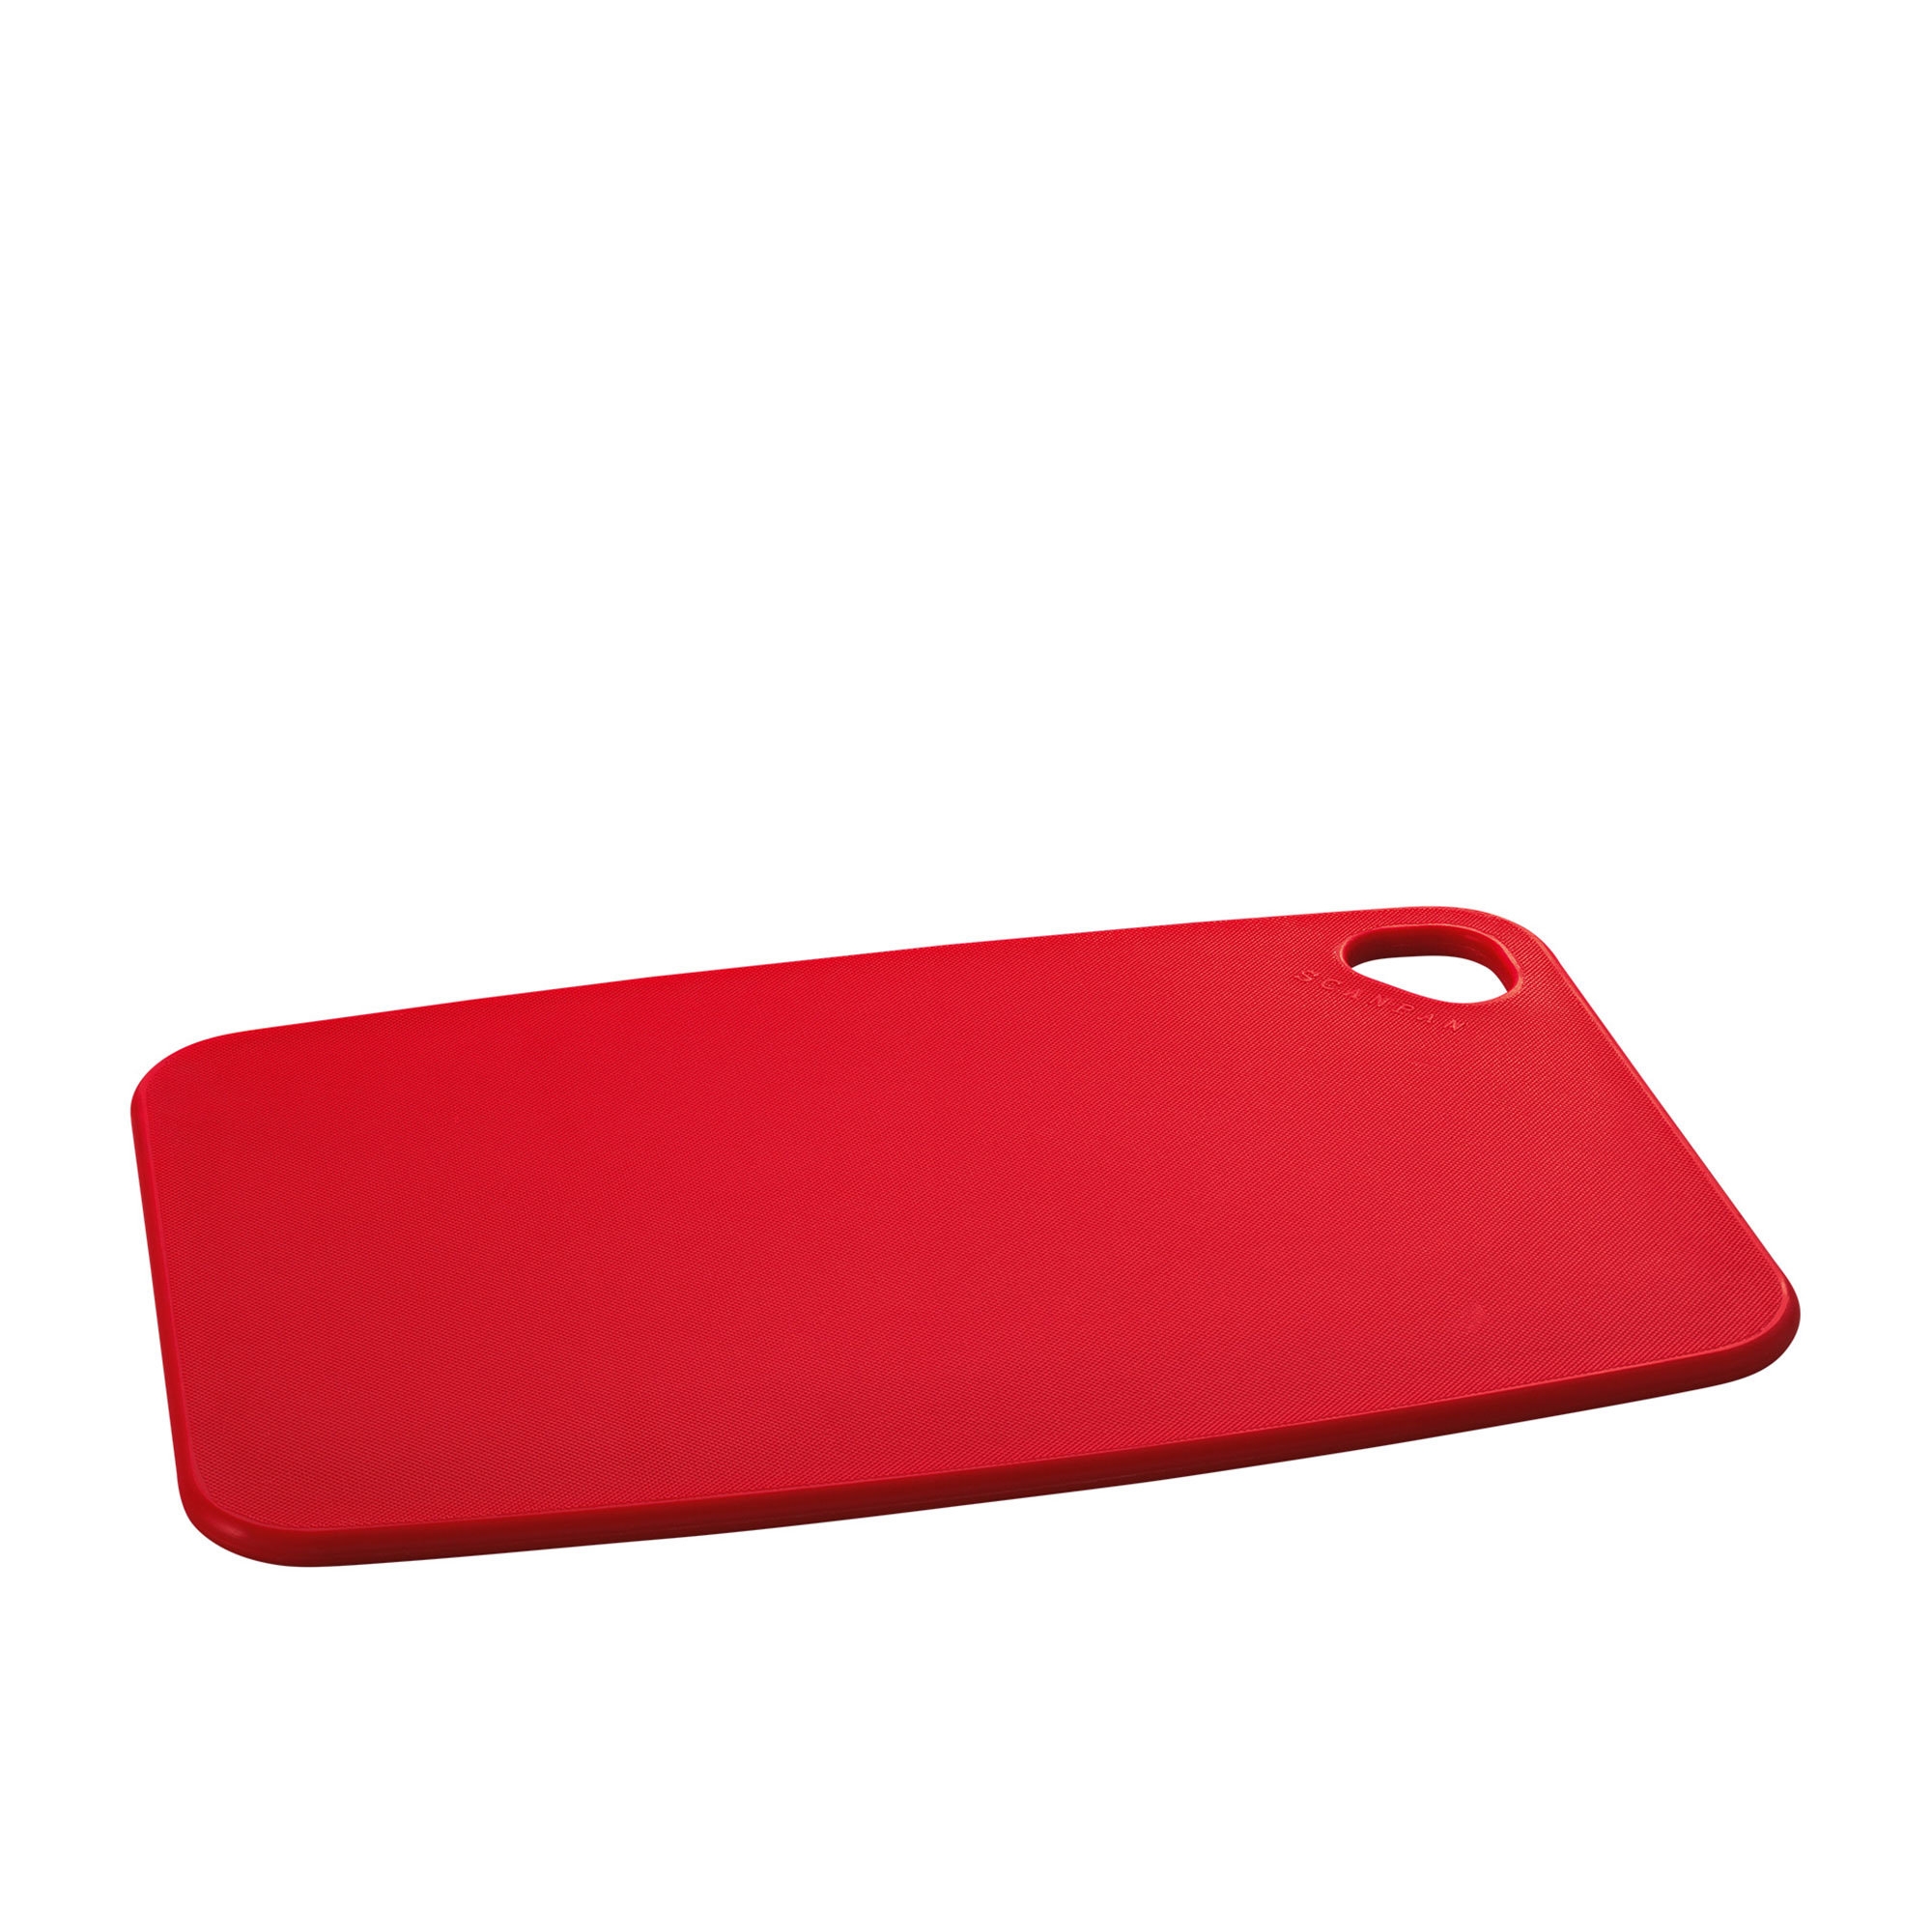 Scanpan Cutting Board 35x23cm Red Image 1